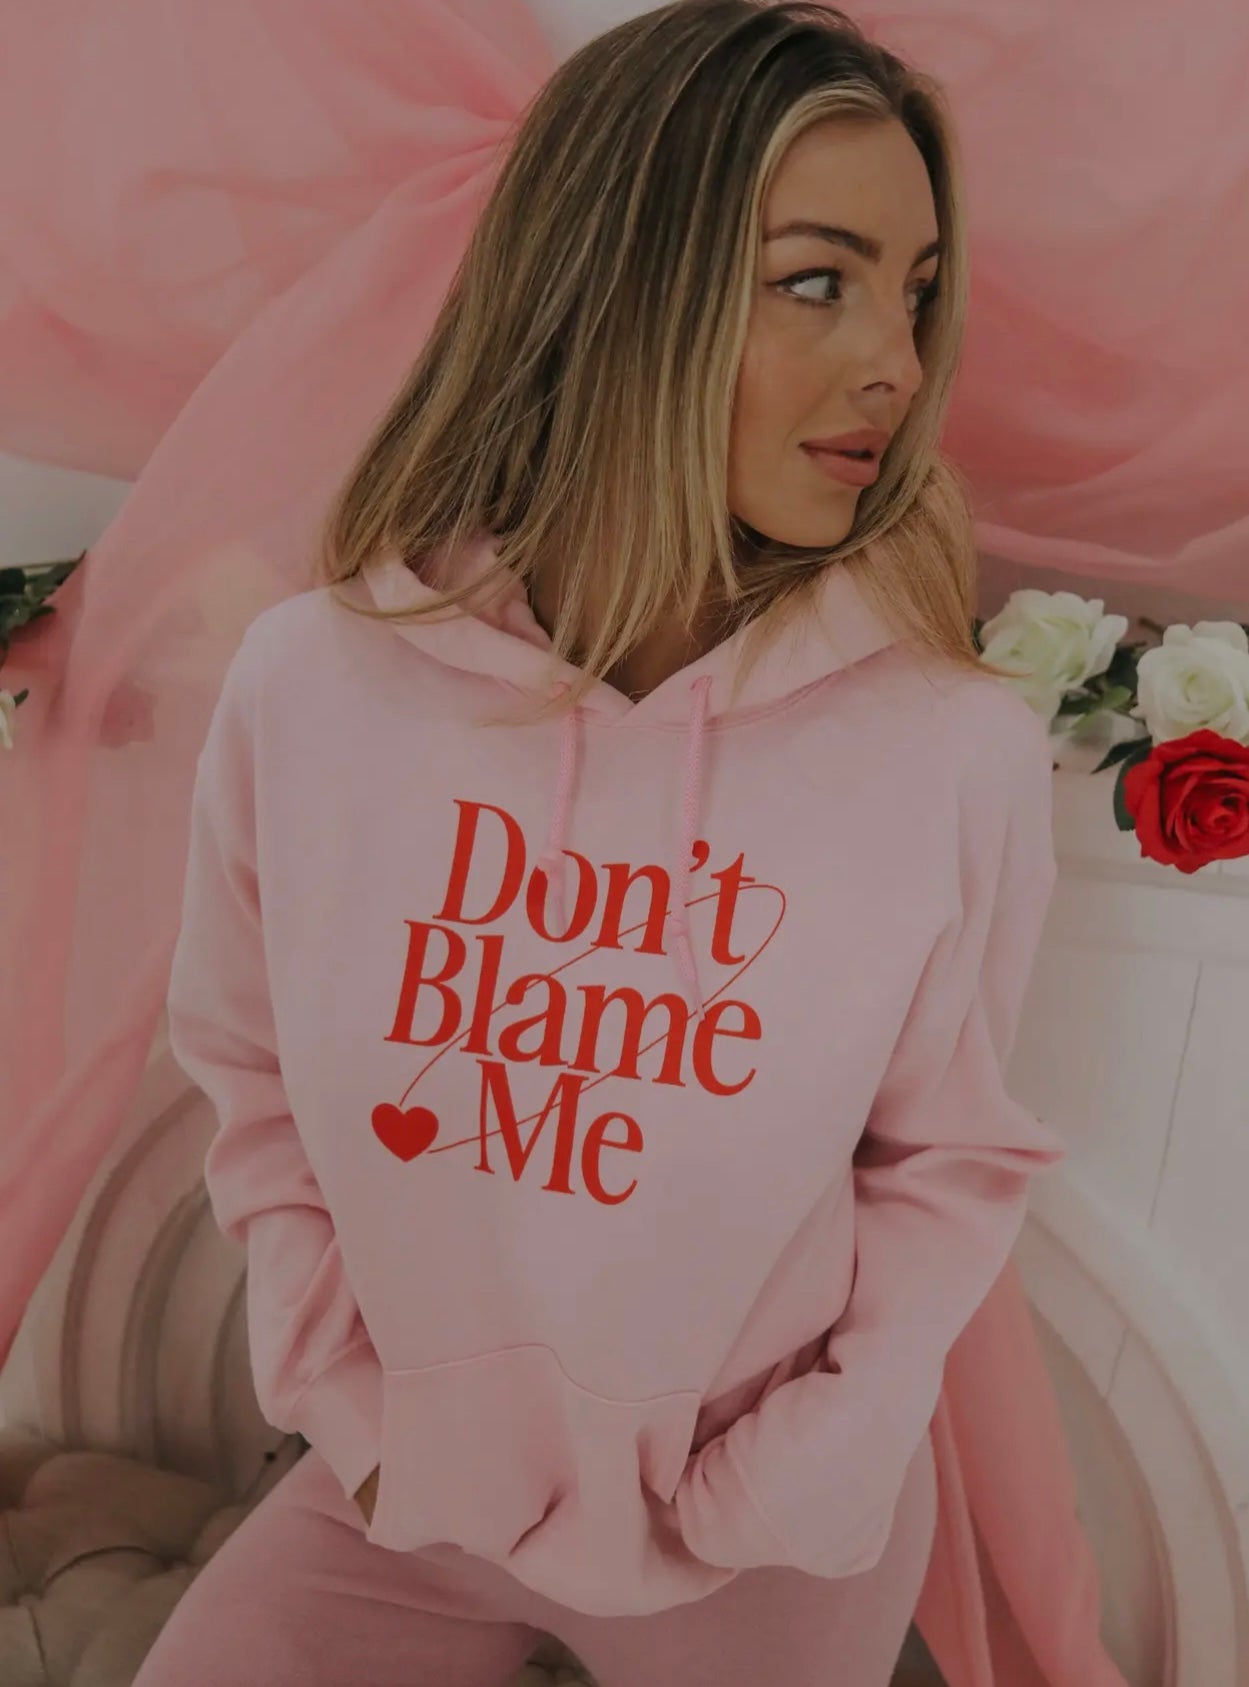 Don’t blame me